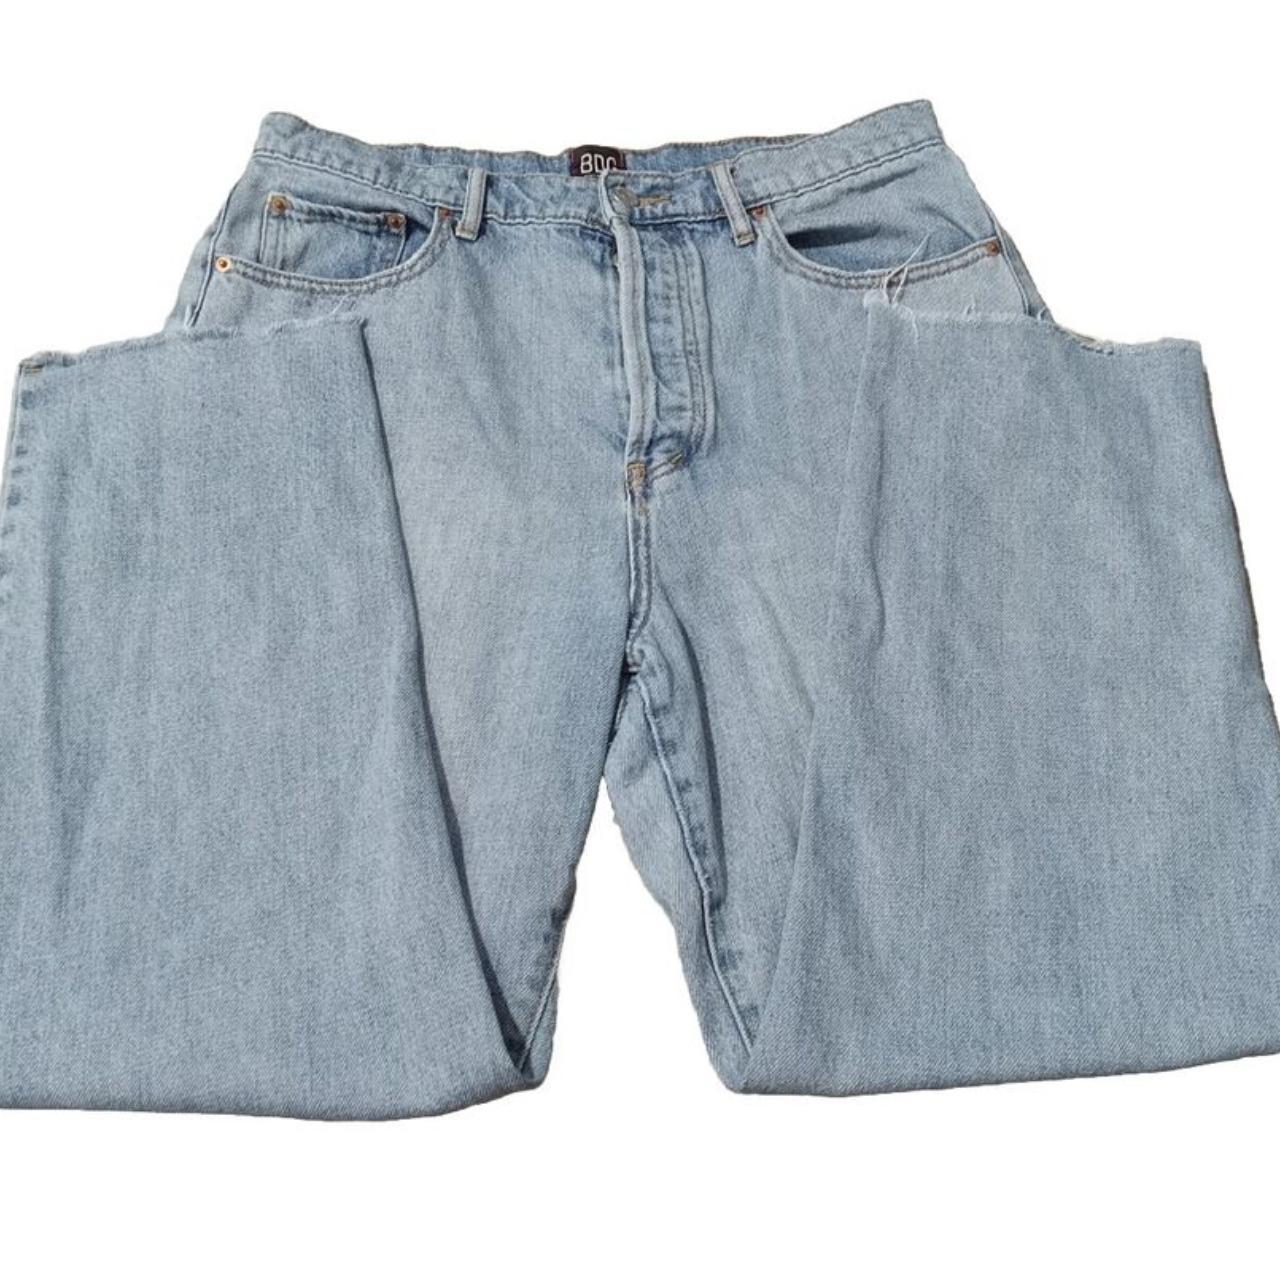 BDG Urban Outfitters Women's Denim Baggy Jeans Pants... - Depop